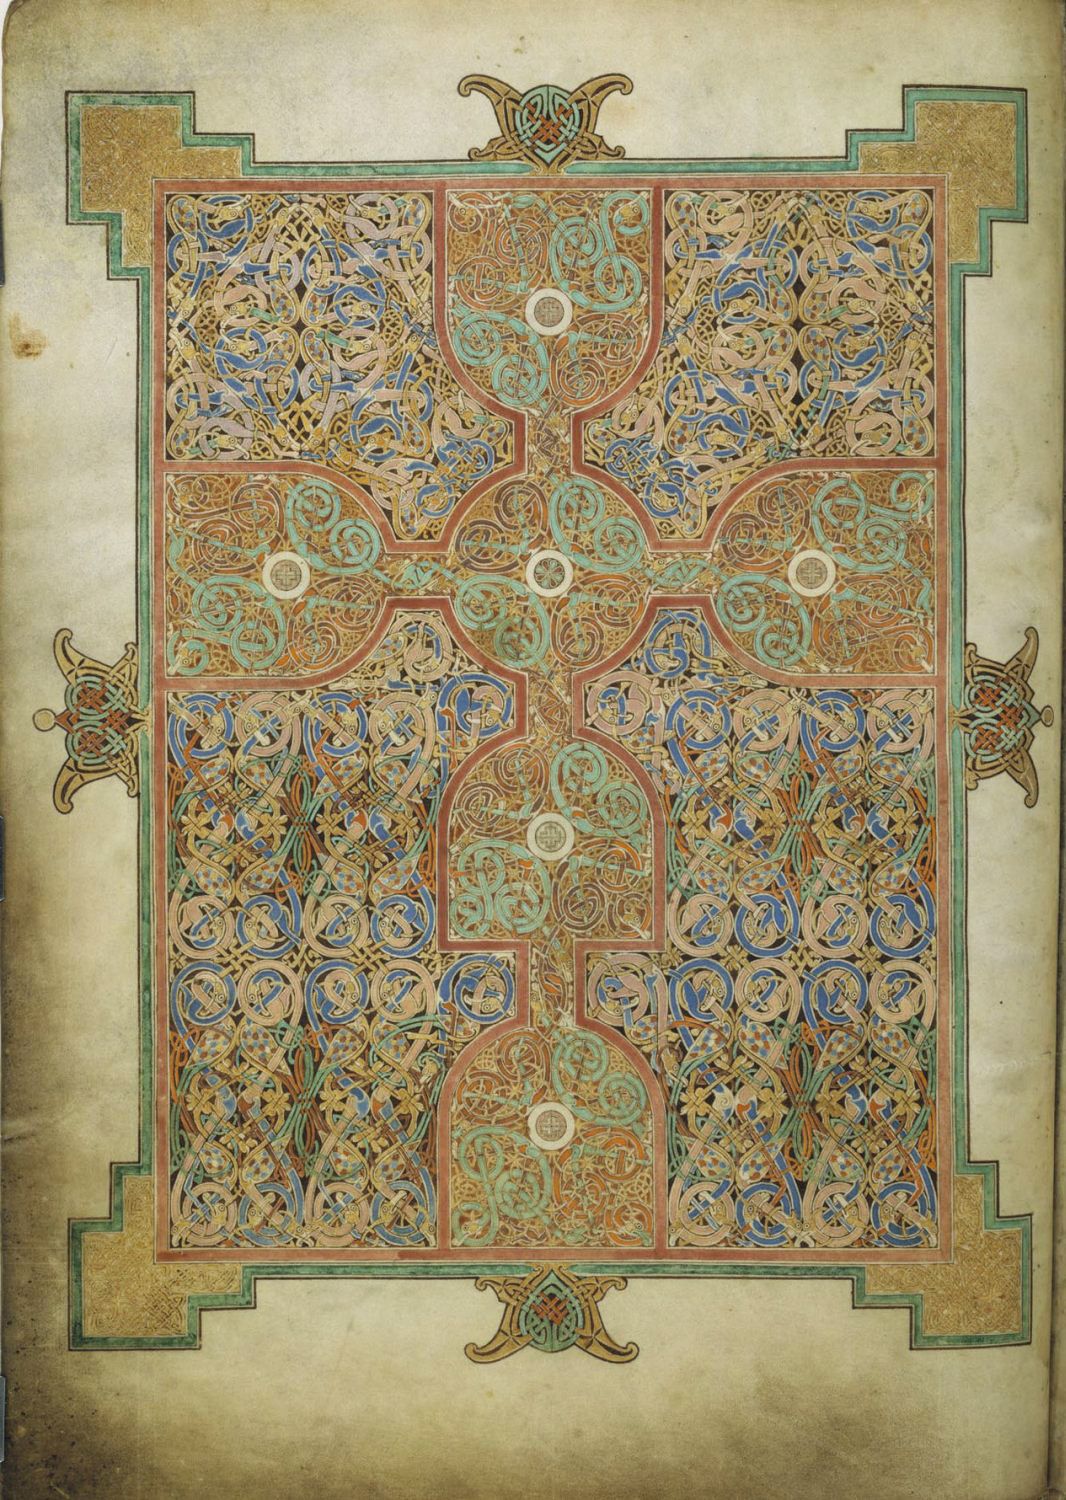 Carpet Page F26v, from Lindisfarne Gospels (715-720) - Public Domain Illuminated Manuscript